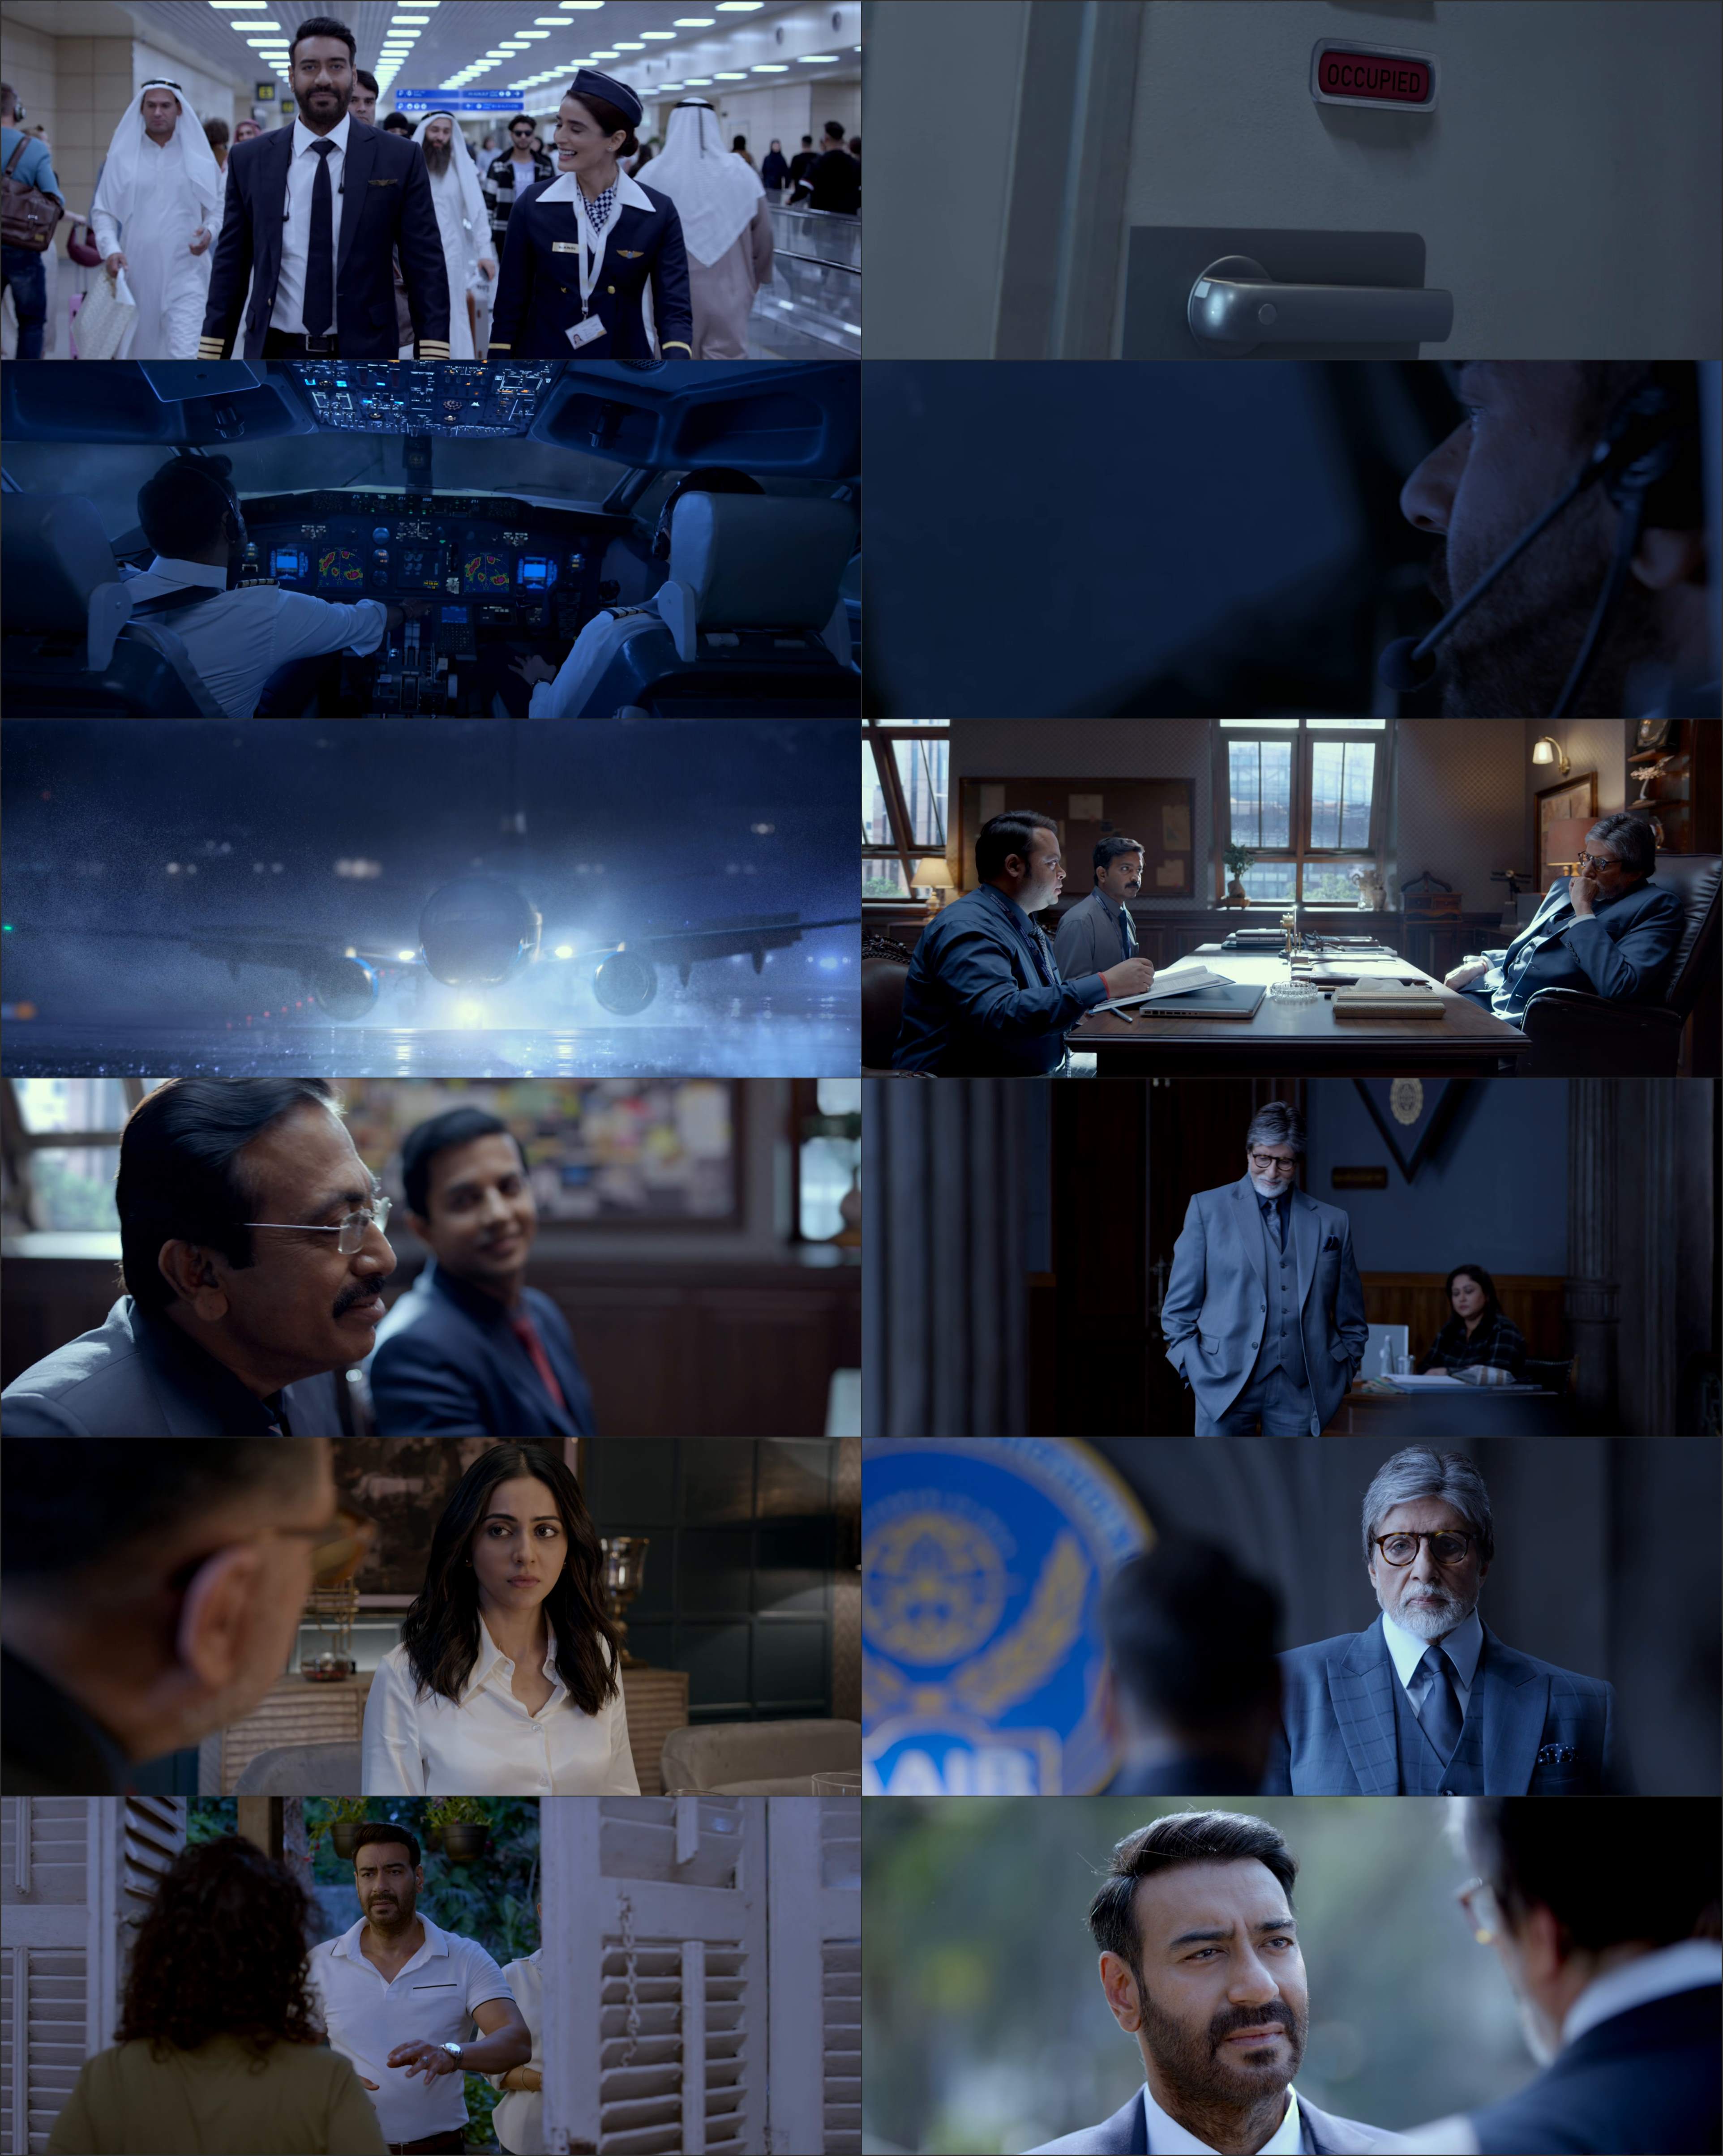 Runway 34 2022 WEB-DL Hindi Movie Download 1080p 720p 480p